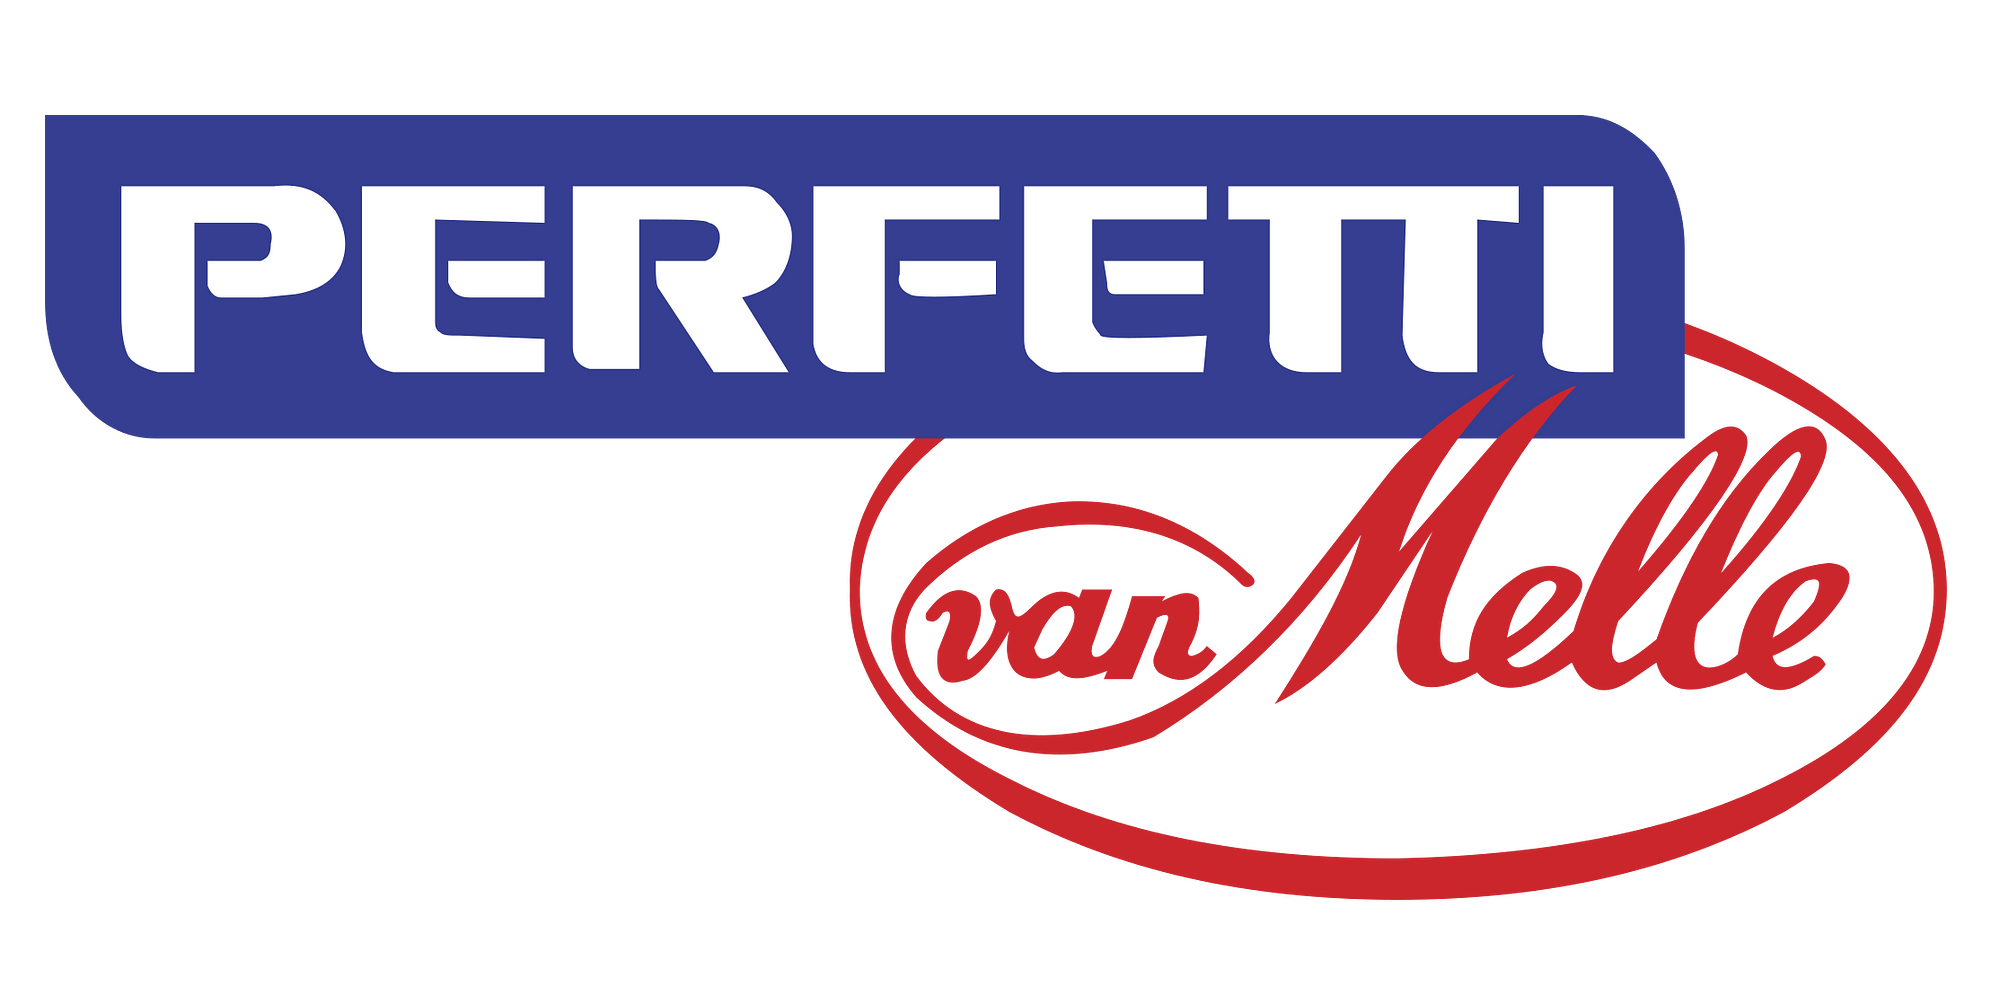 Perfetti - Van Melle